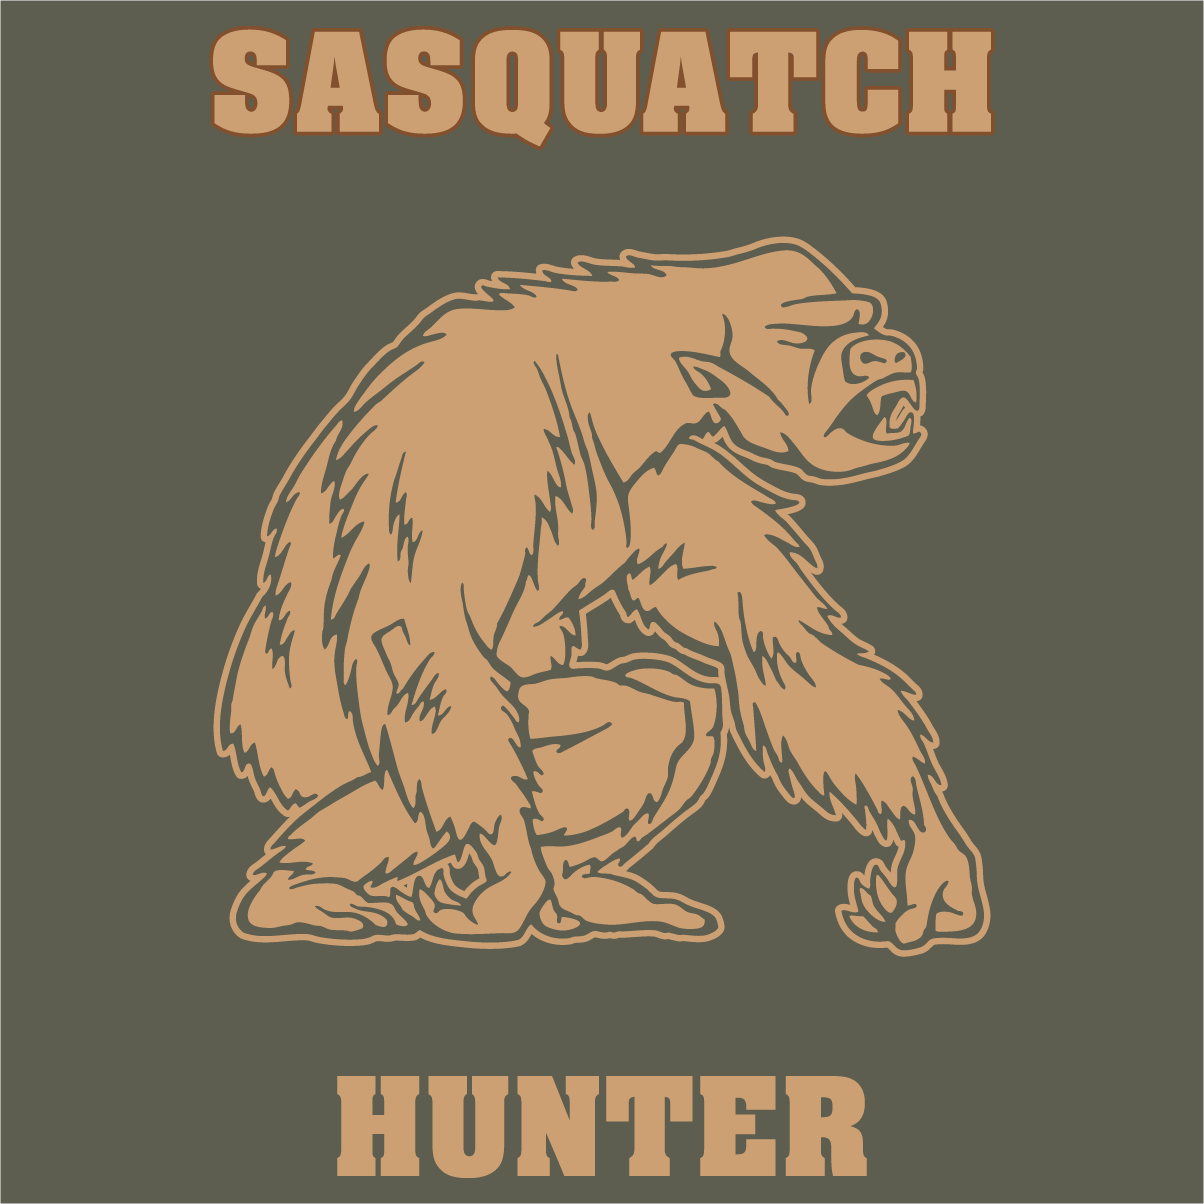 Sasquatch hunter shirt design - zoomed